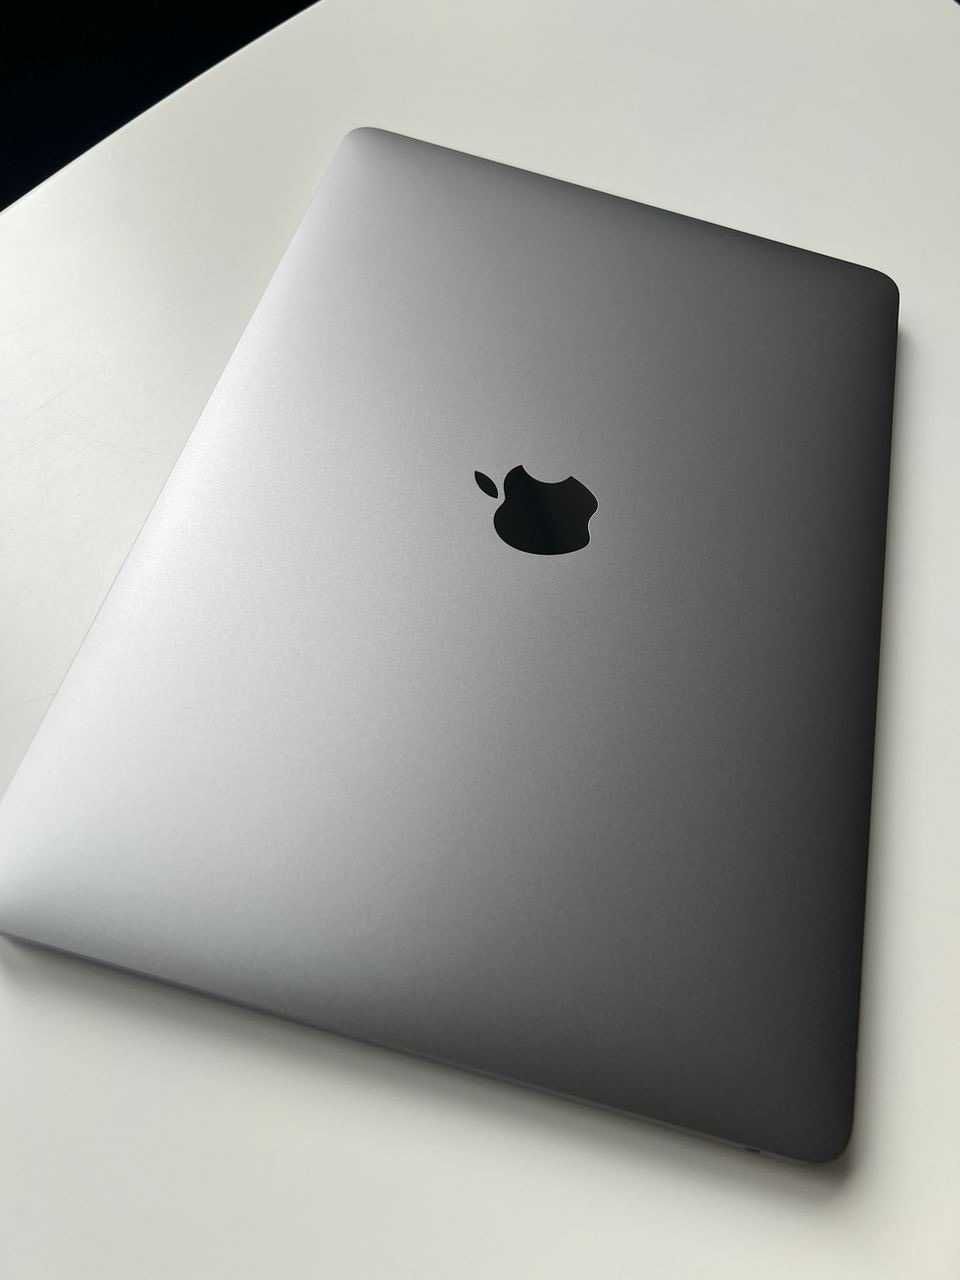 MacBook Pro 13", 2020, Intel Core i5, 8GB RAM, 256GB